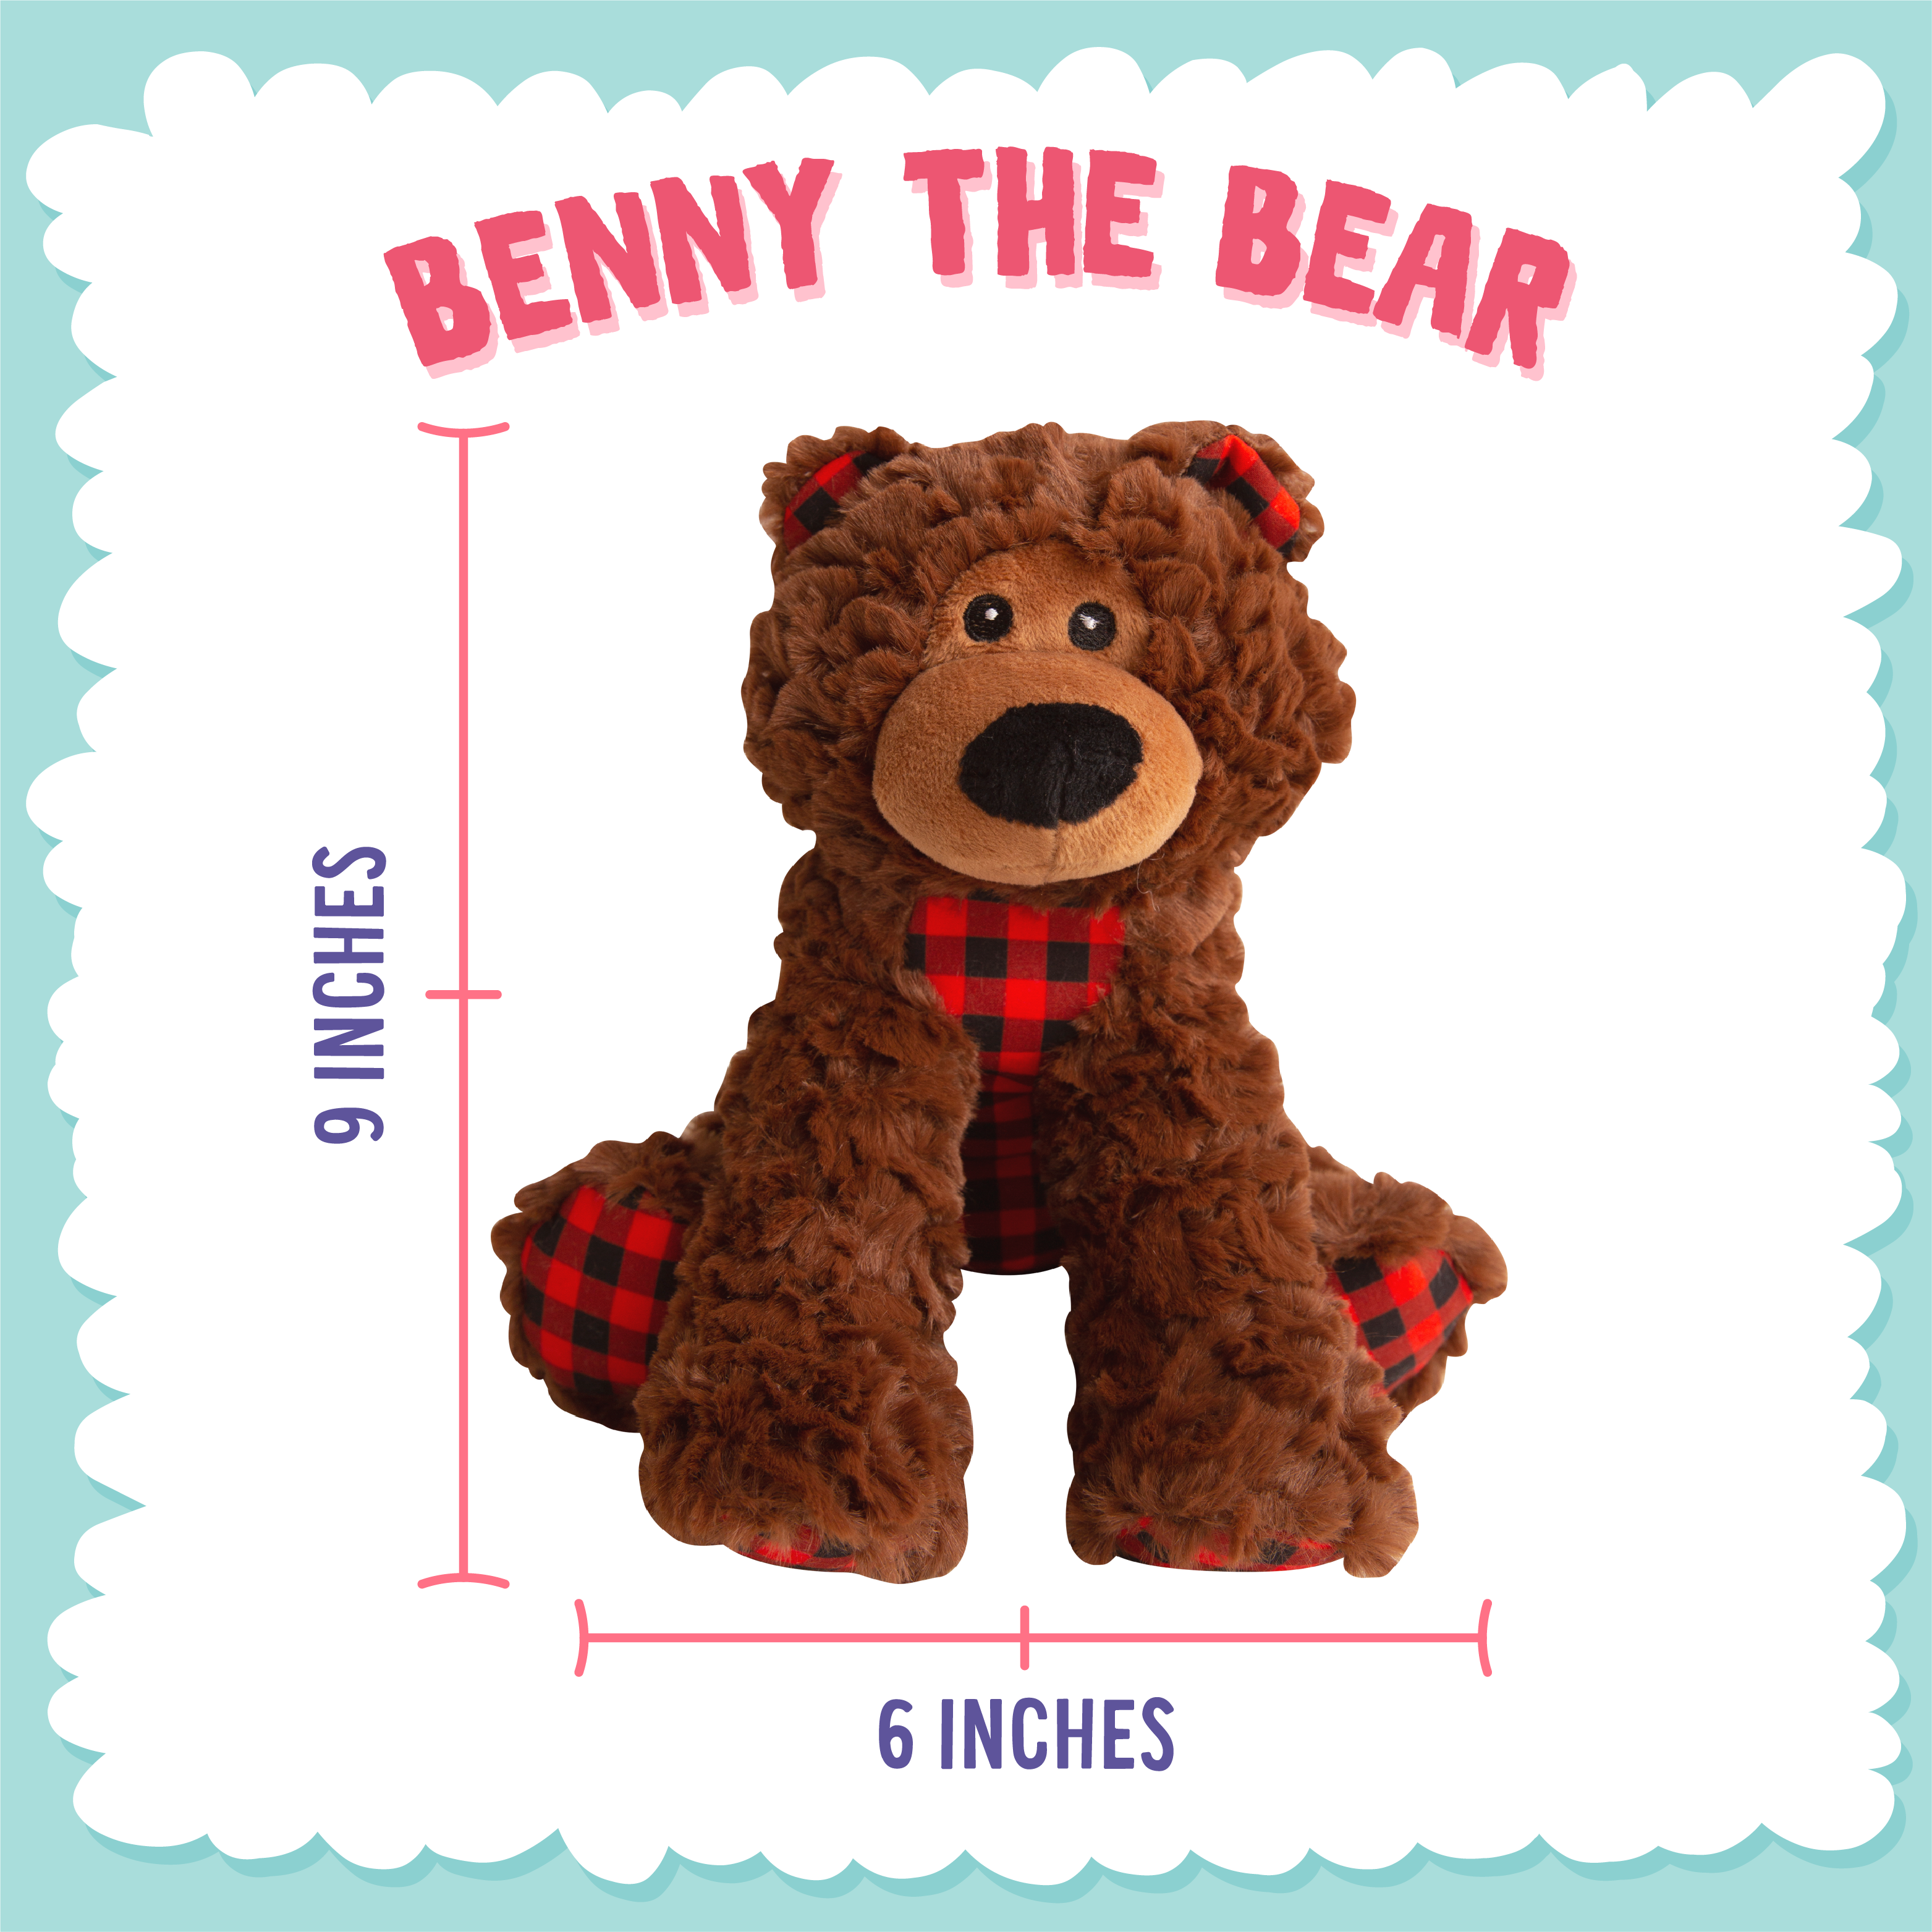 Benny the Bear